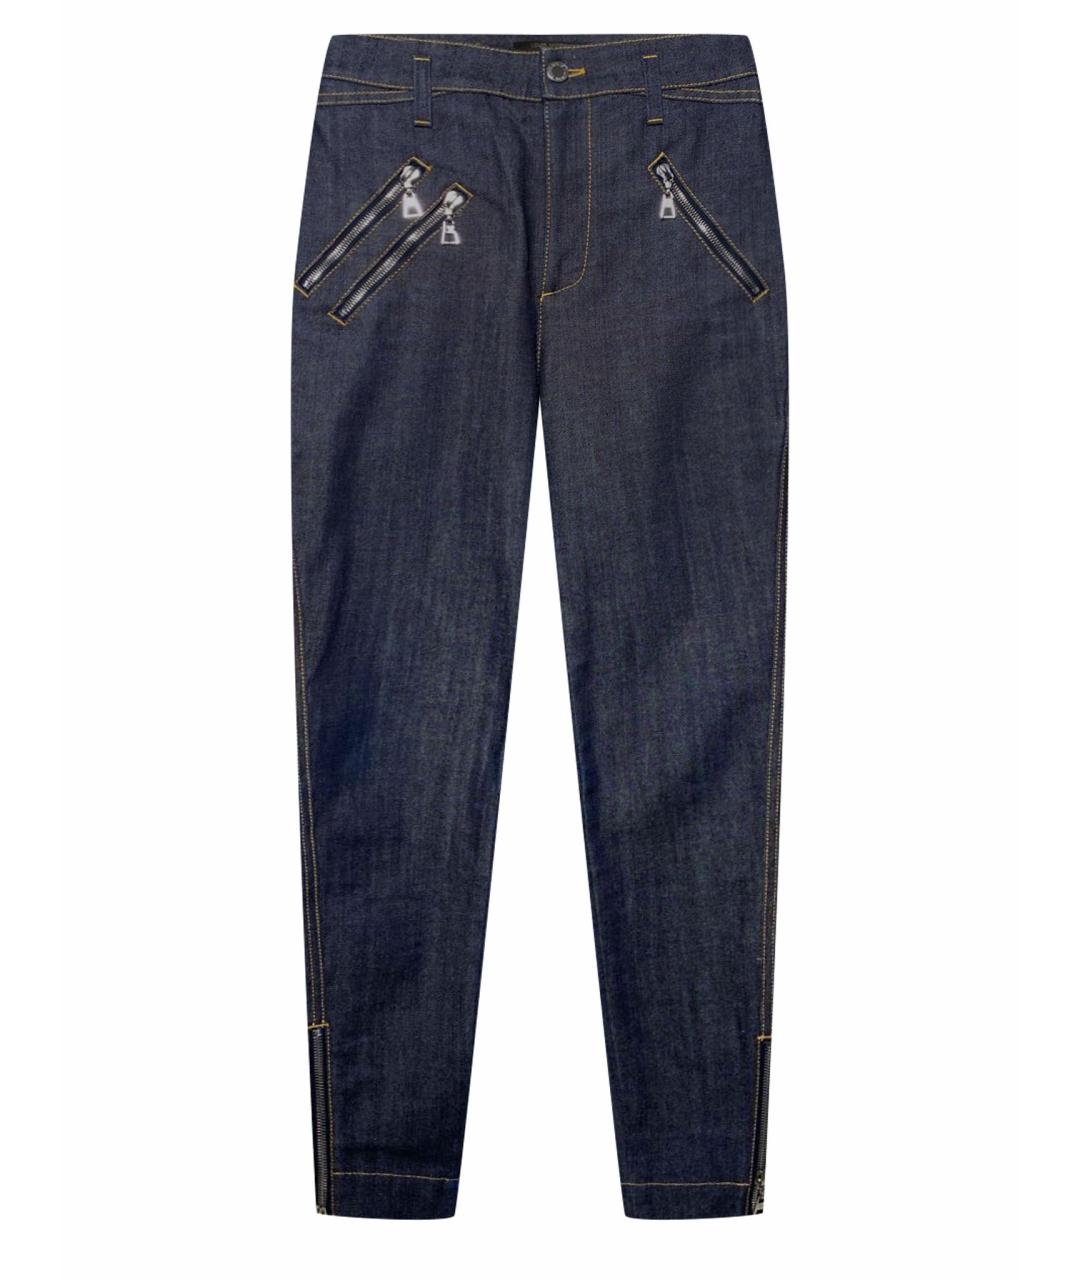 LOUIS VUITTON PRE-OWNED Синие хлопковые прямые джинсы, фото 1